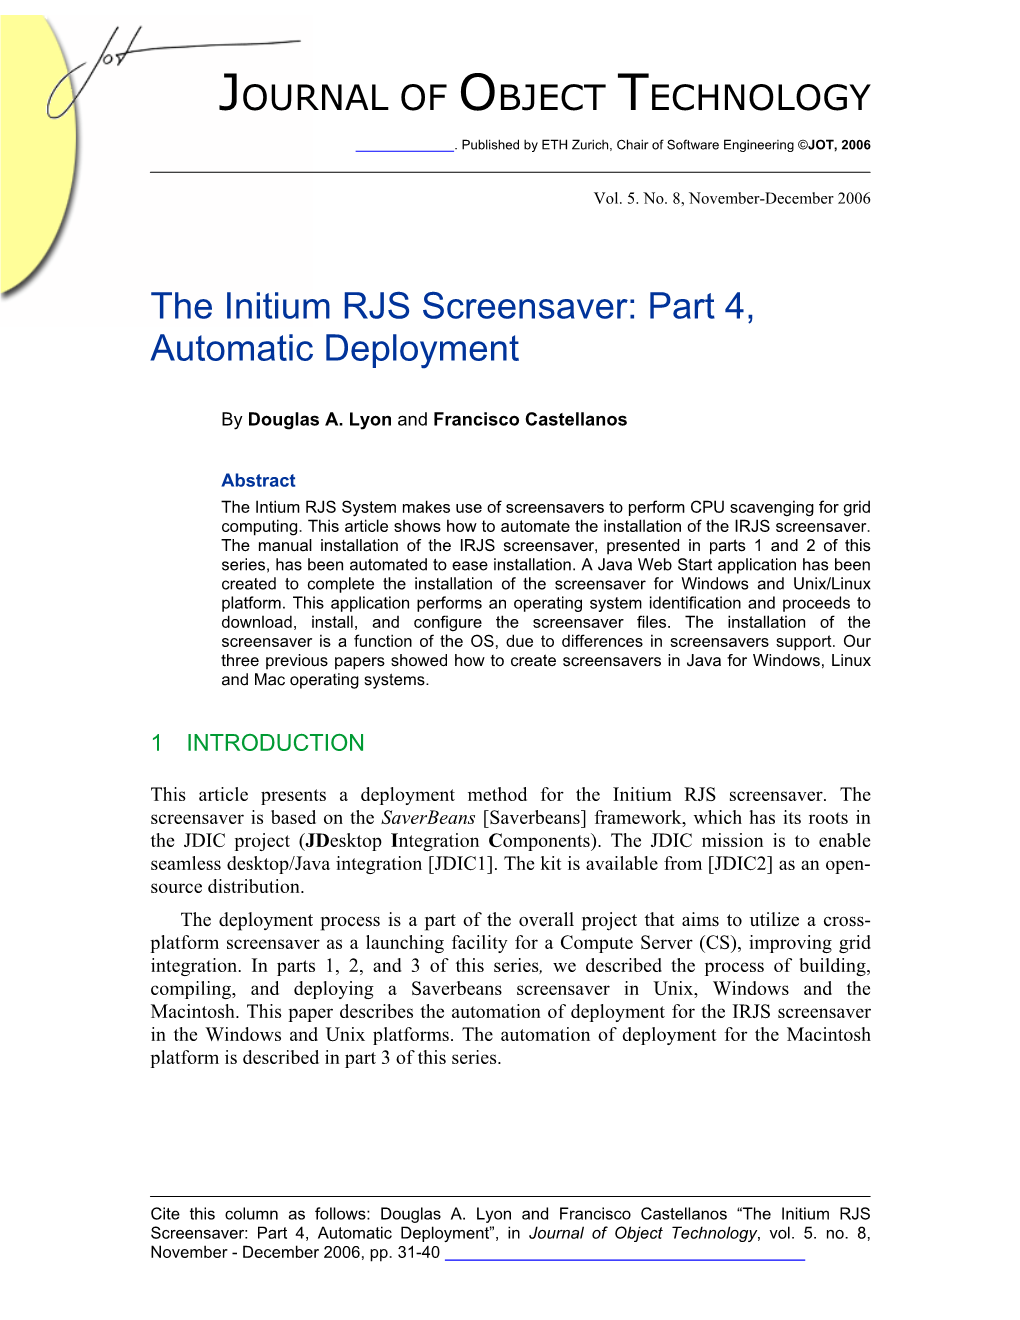 The Initium RJS Screensaver: Part 4, Automatic Deployment